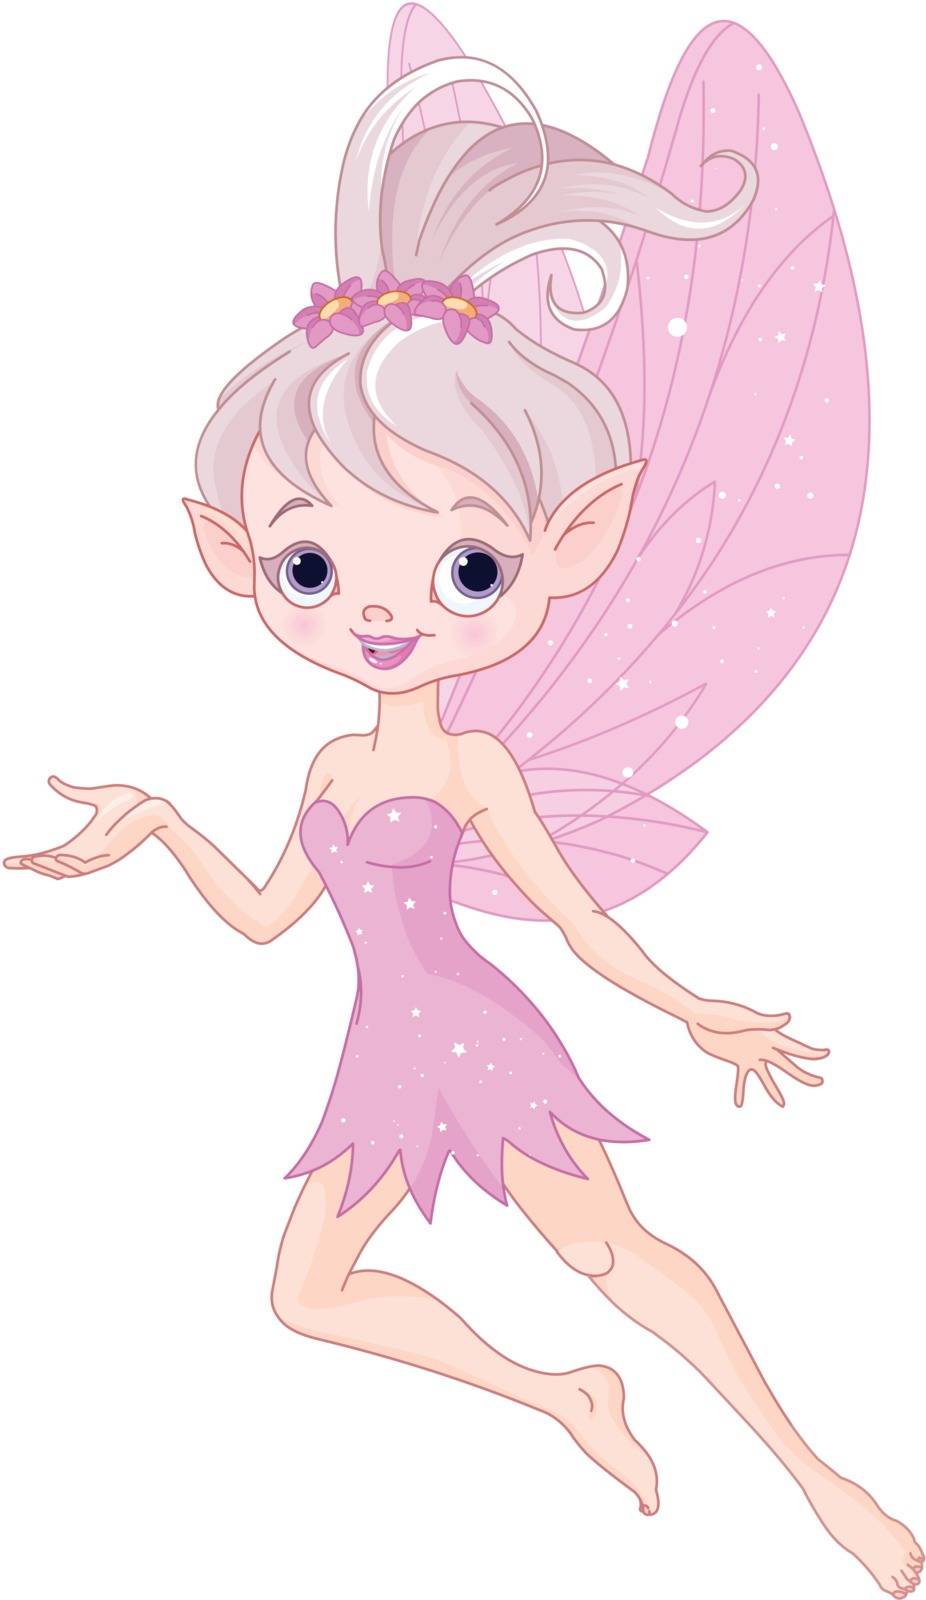 Illustration of beautiful flying pixie fairy